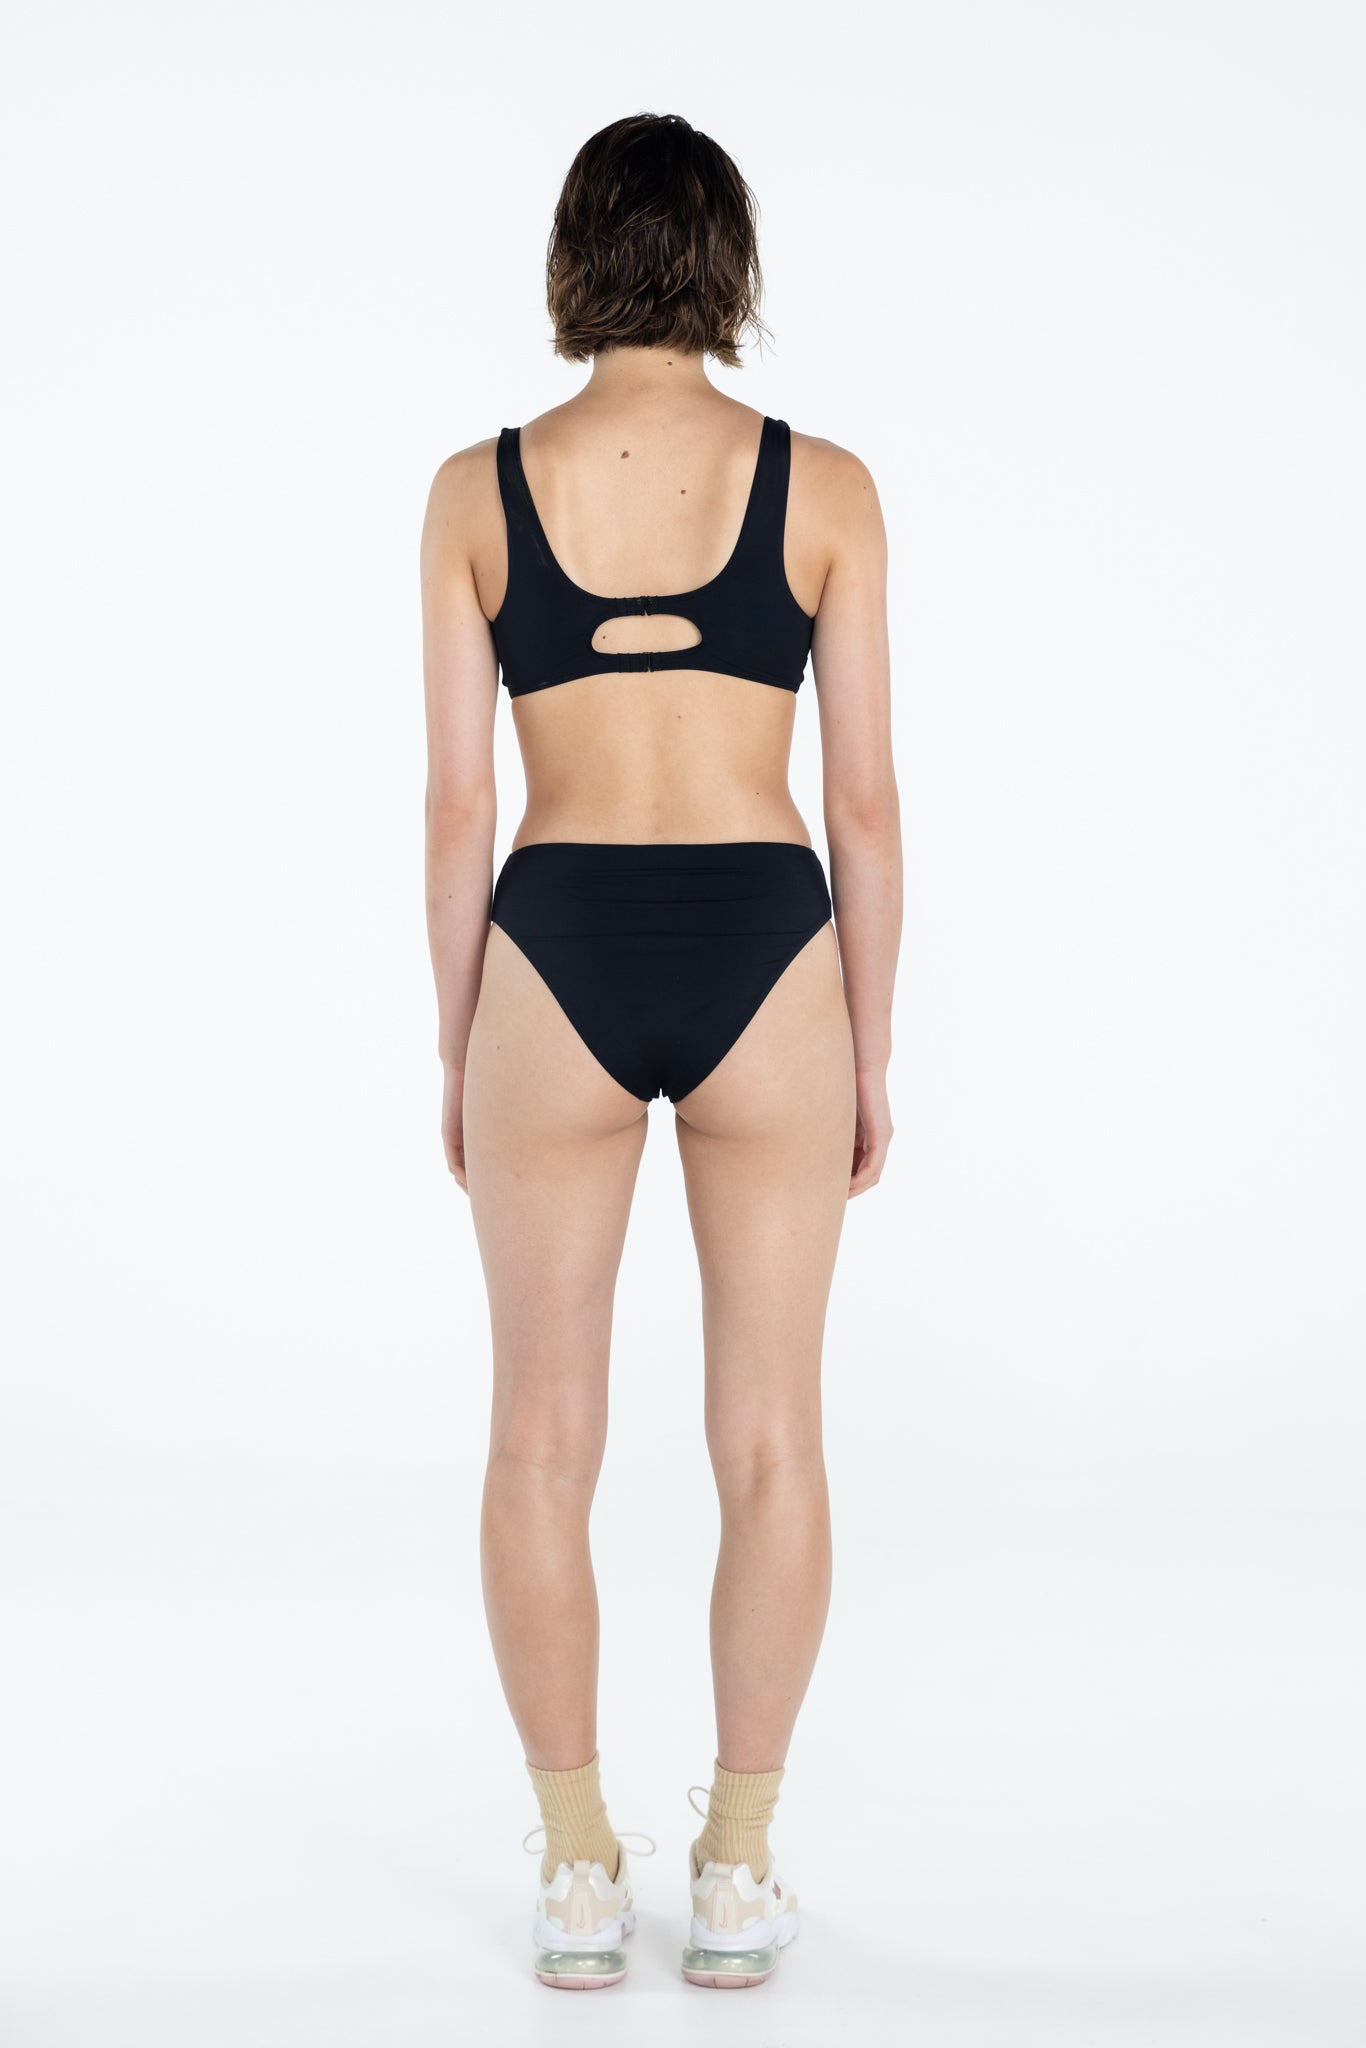 SWMR The Dunk Top bikini top in black back view